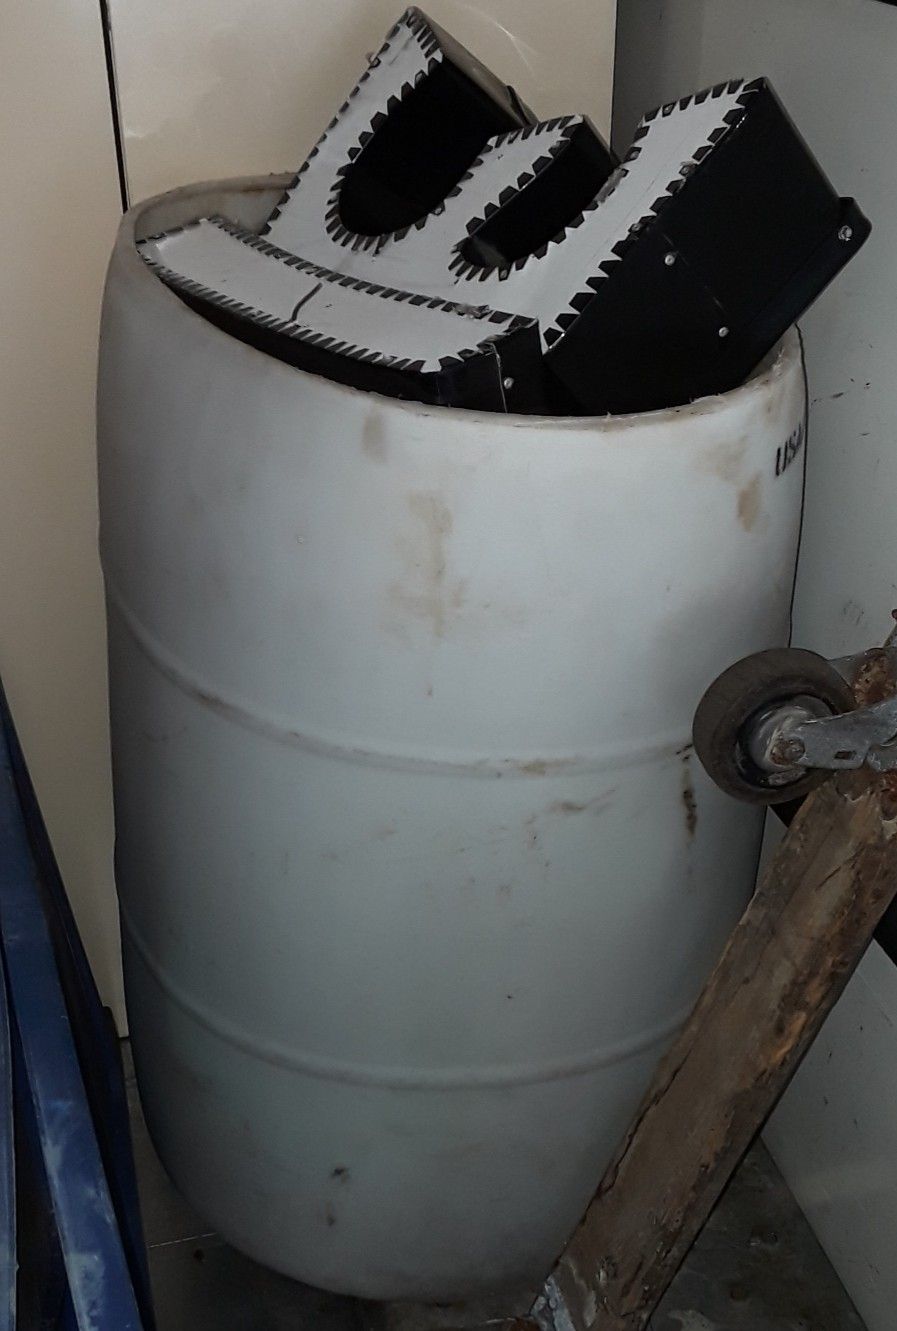 White translucent 55 gallon plastic barrel with open top